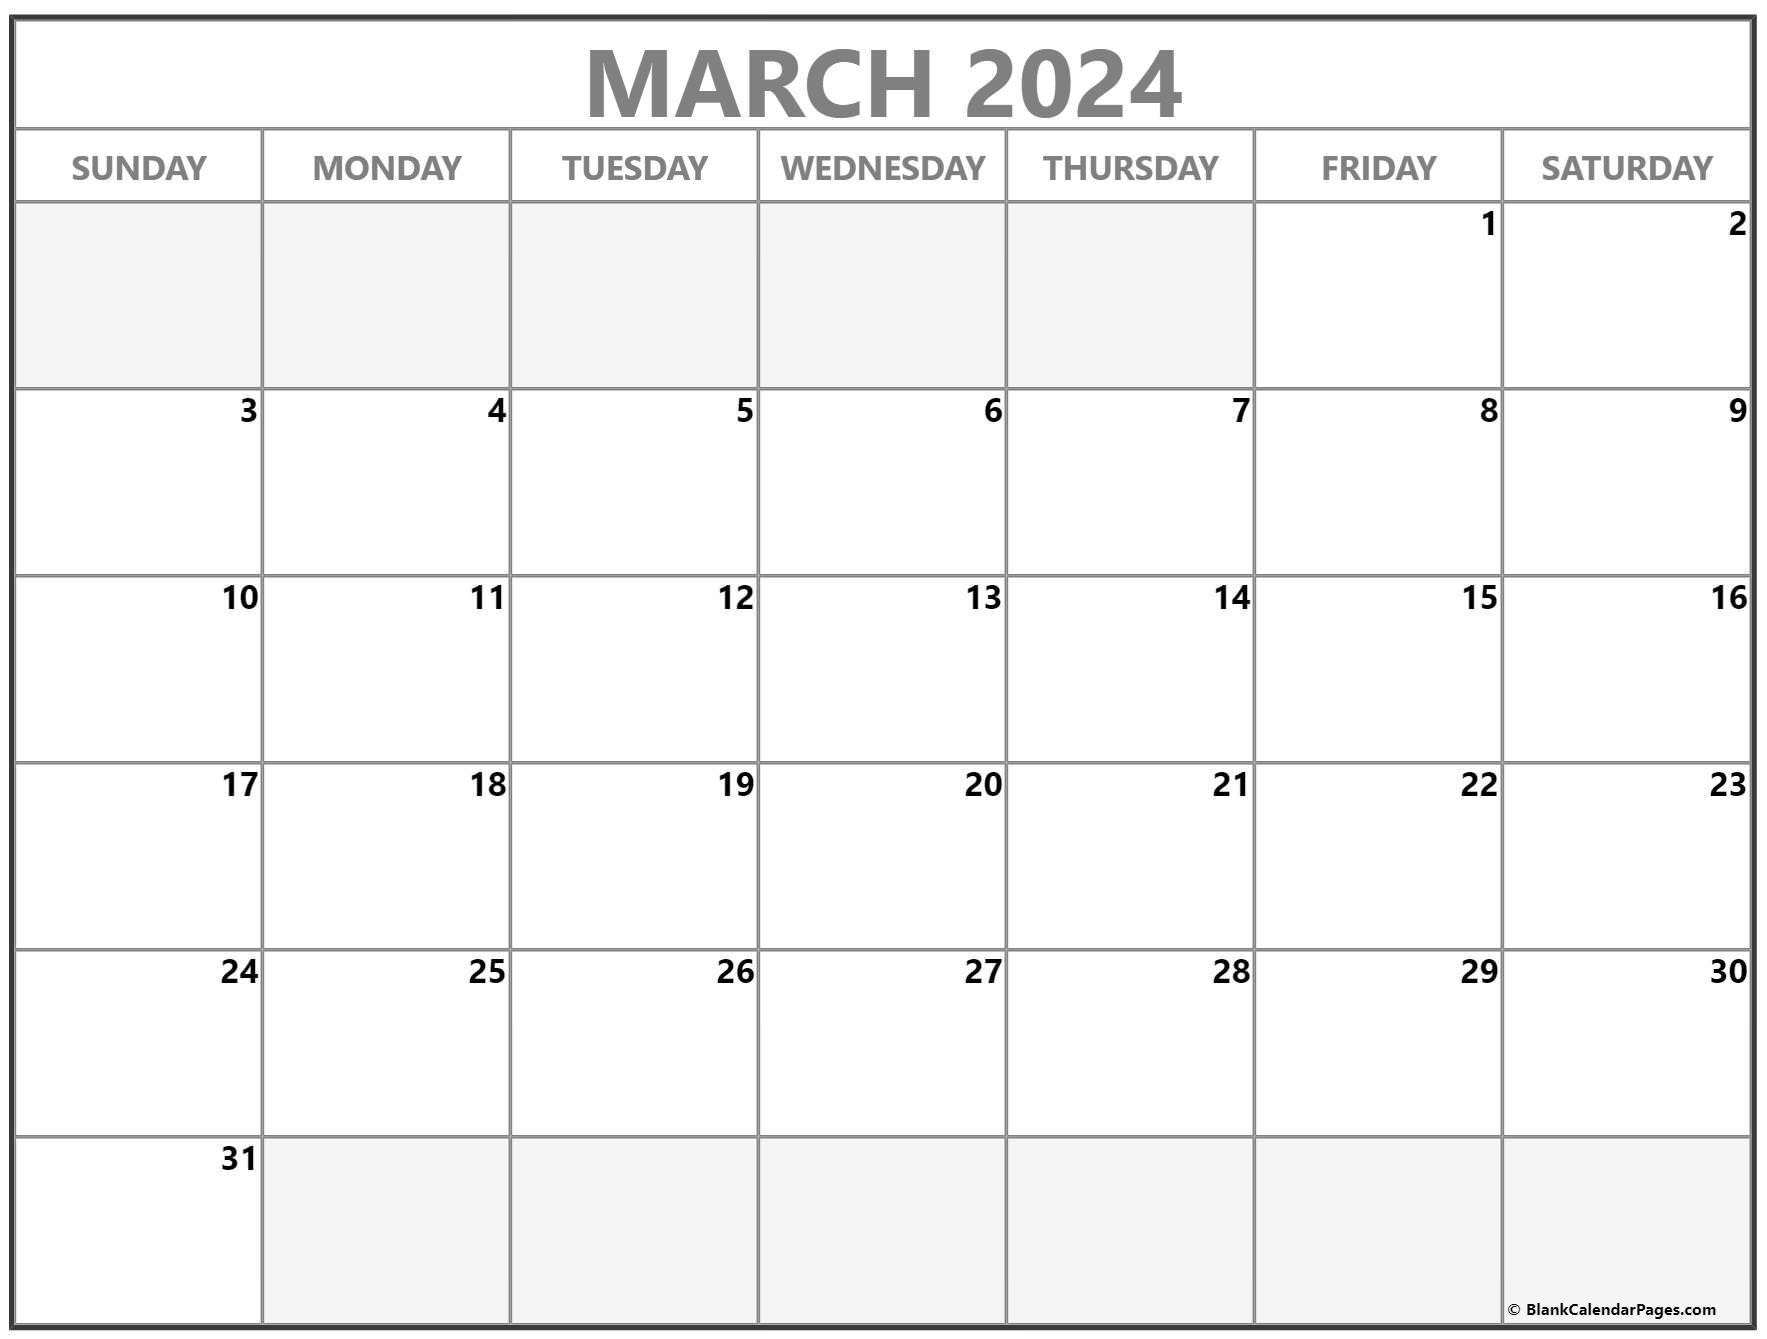 March 2023 Calendar Free Printable Calendar March 2023 Calendar Free Printable Calendar 